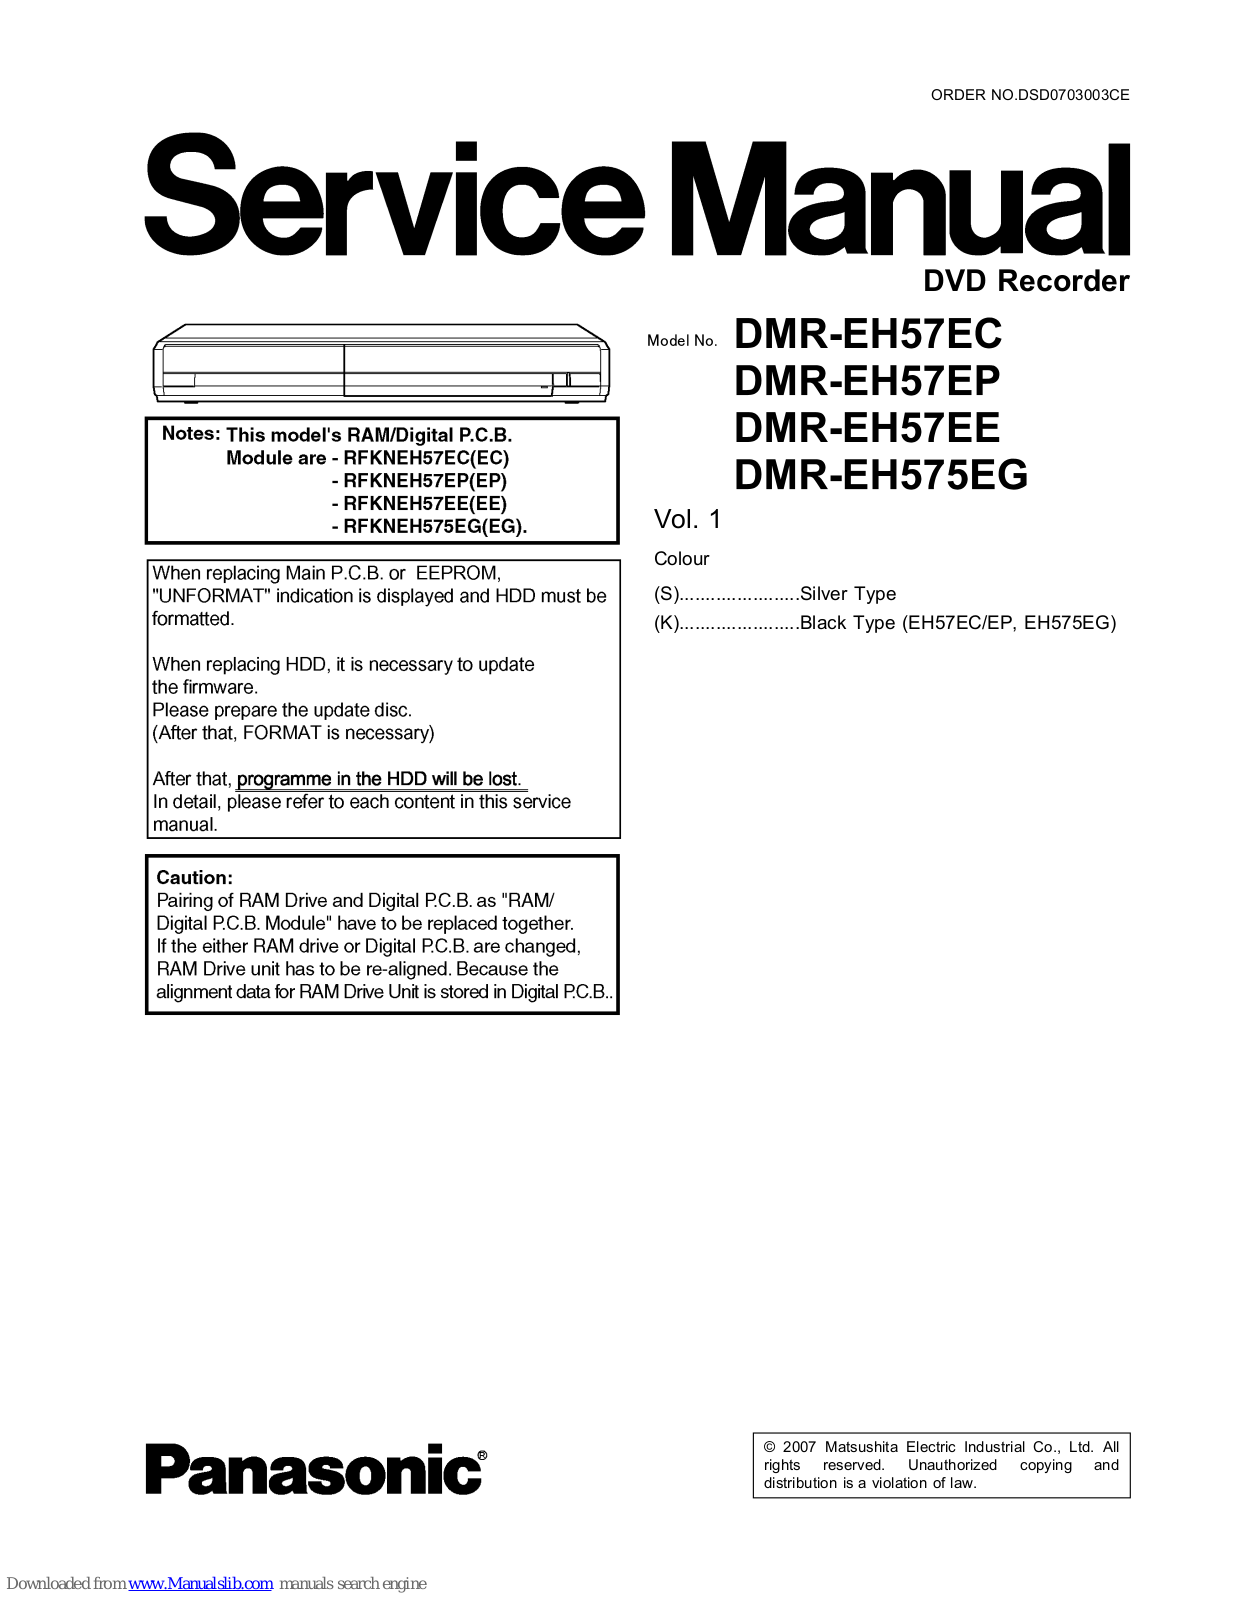 PANASONIC DMR-EH57EG, DMR-EH57EP, DMR-EH57EE, DMR-EH57EC Service Manual